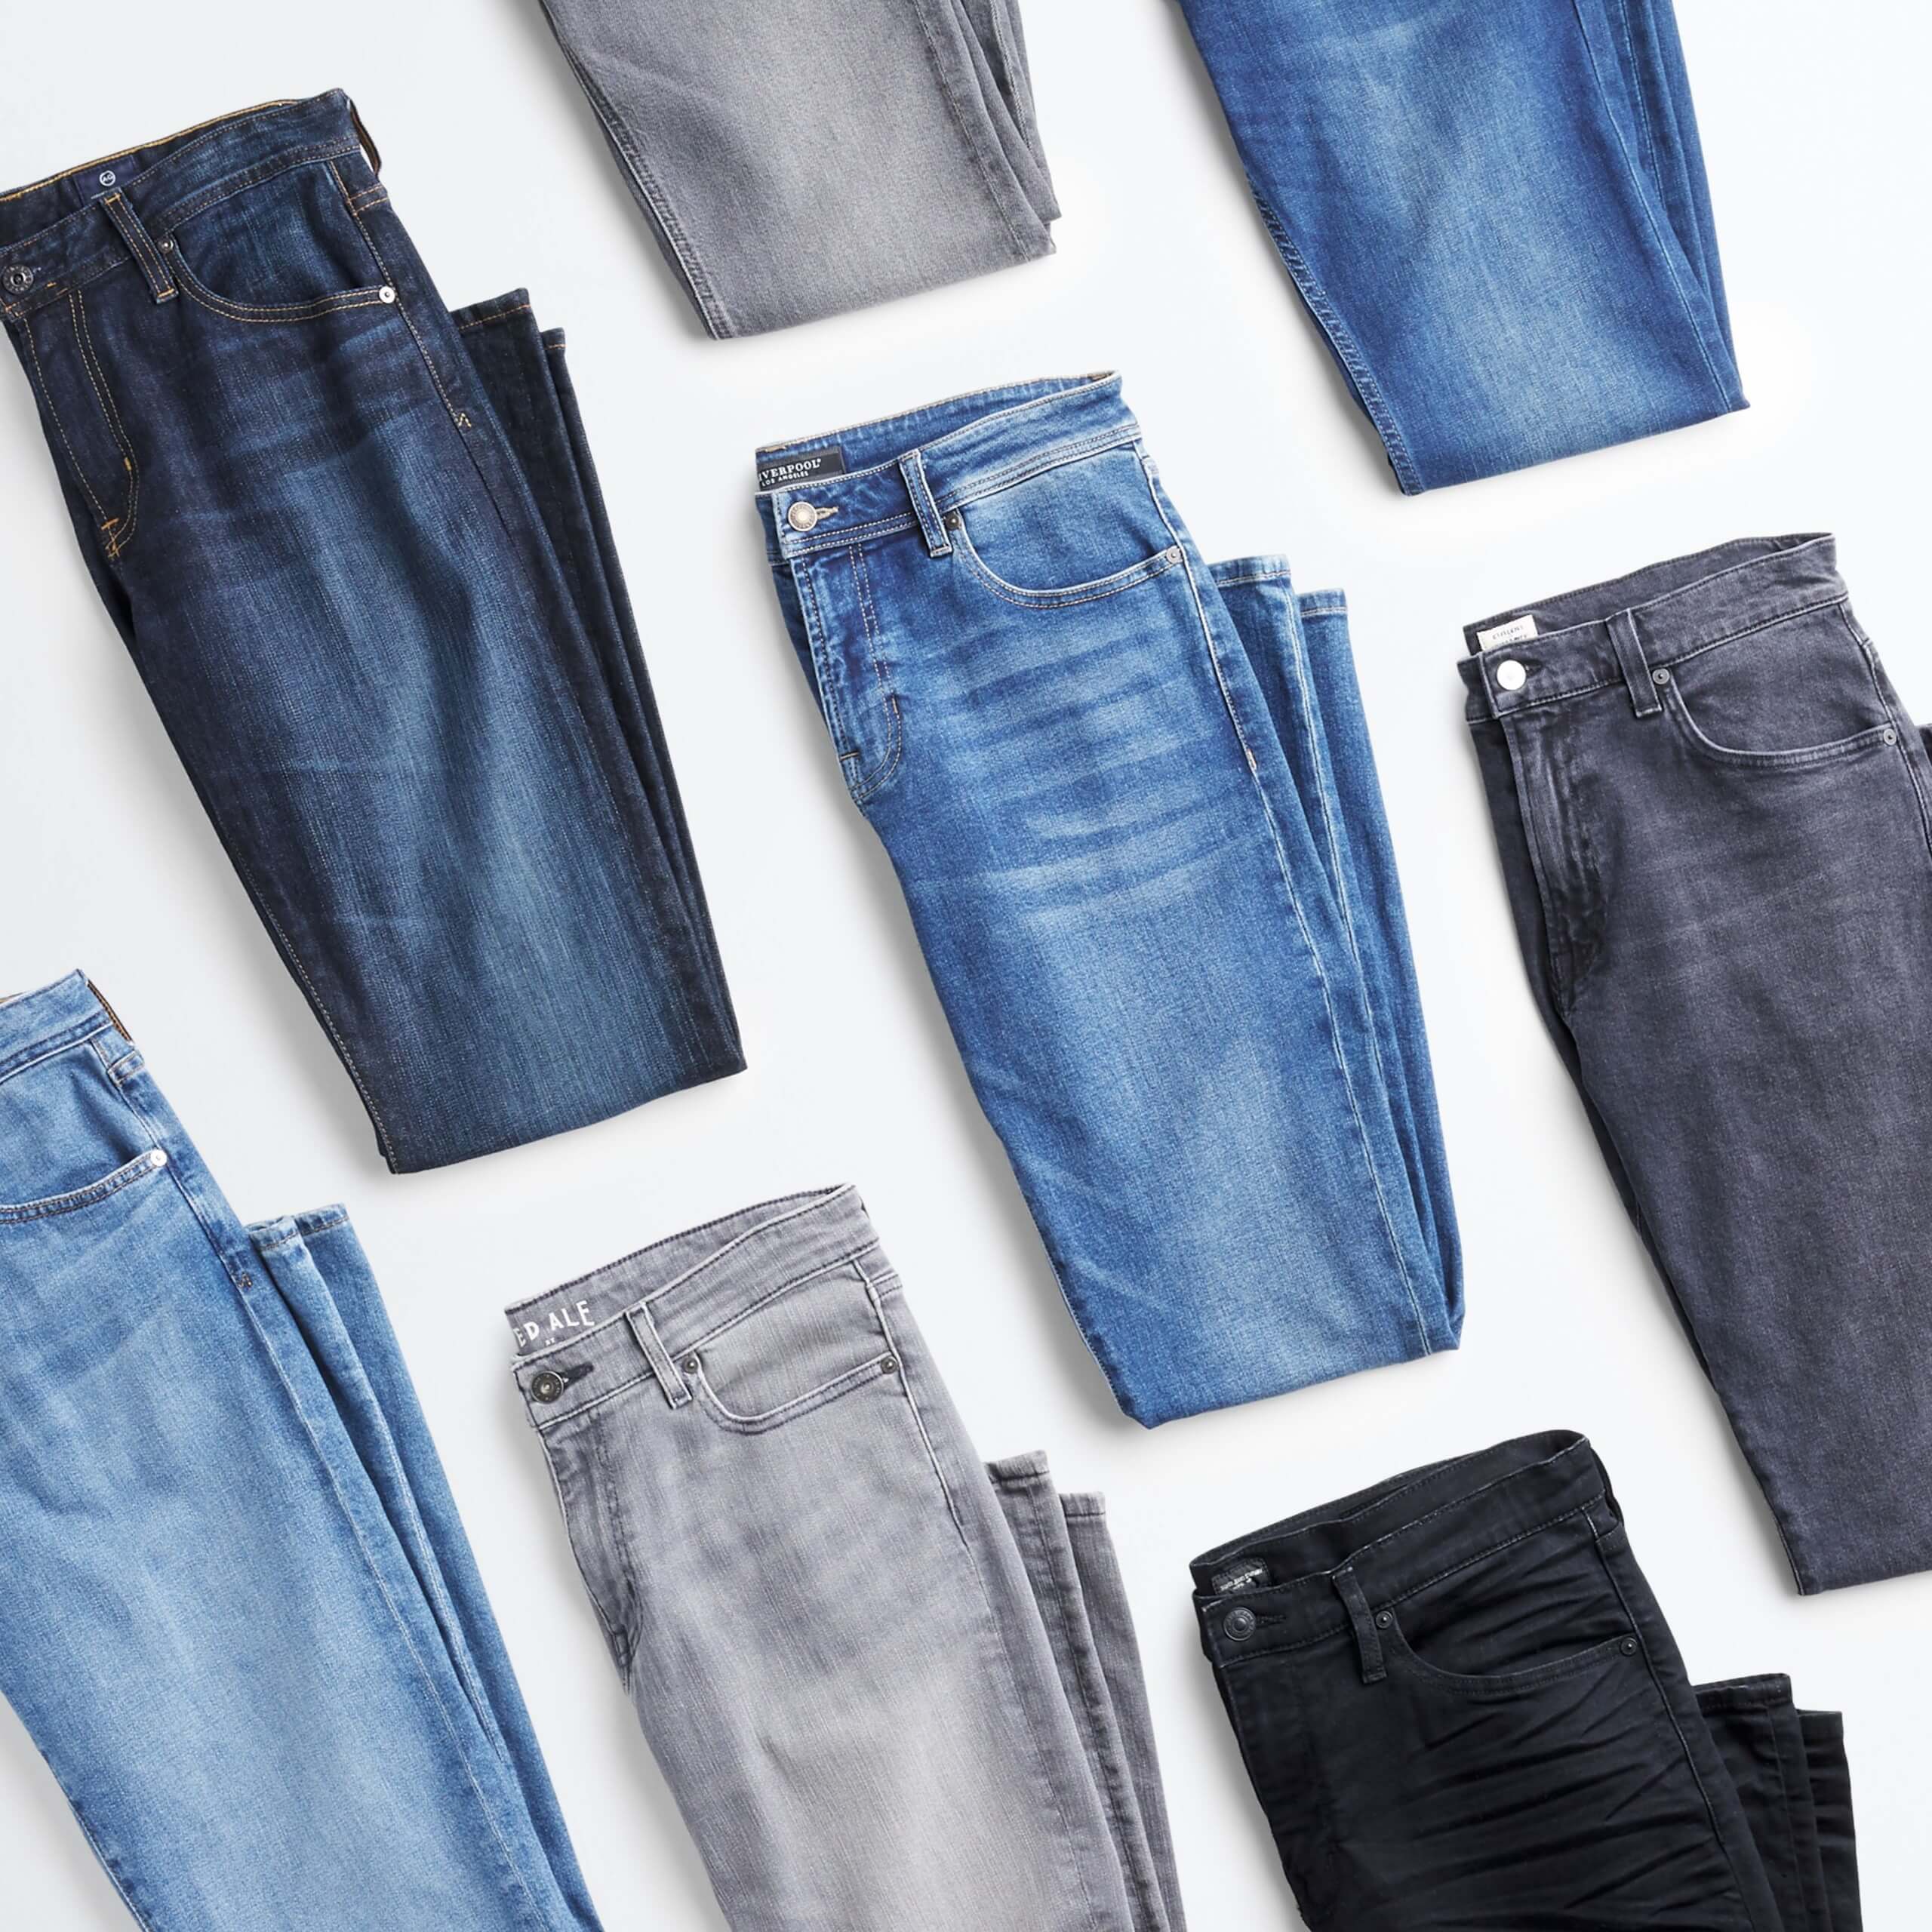 The Best-Fitting Jeans Your Build | Stitch Fix Men